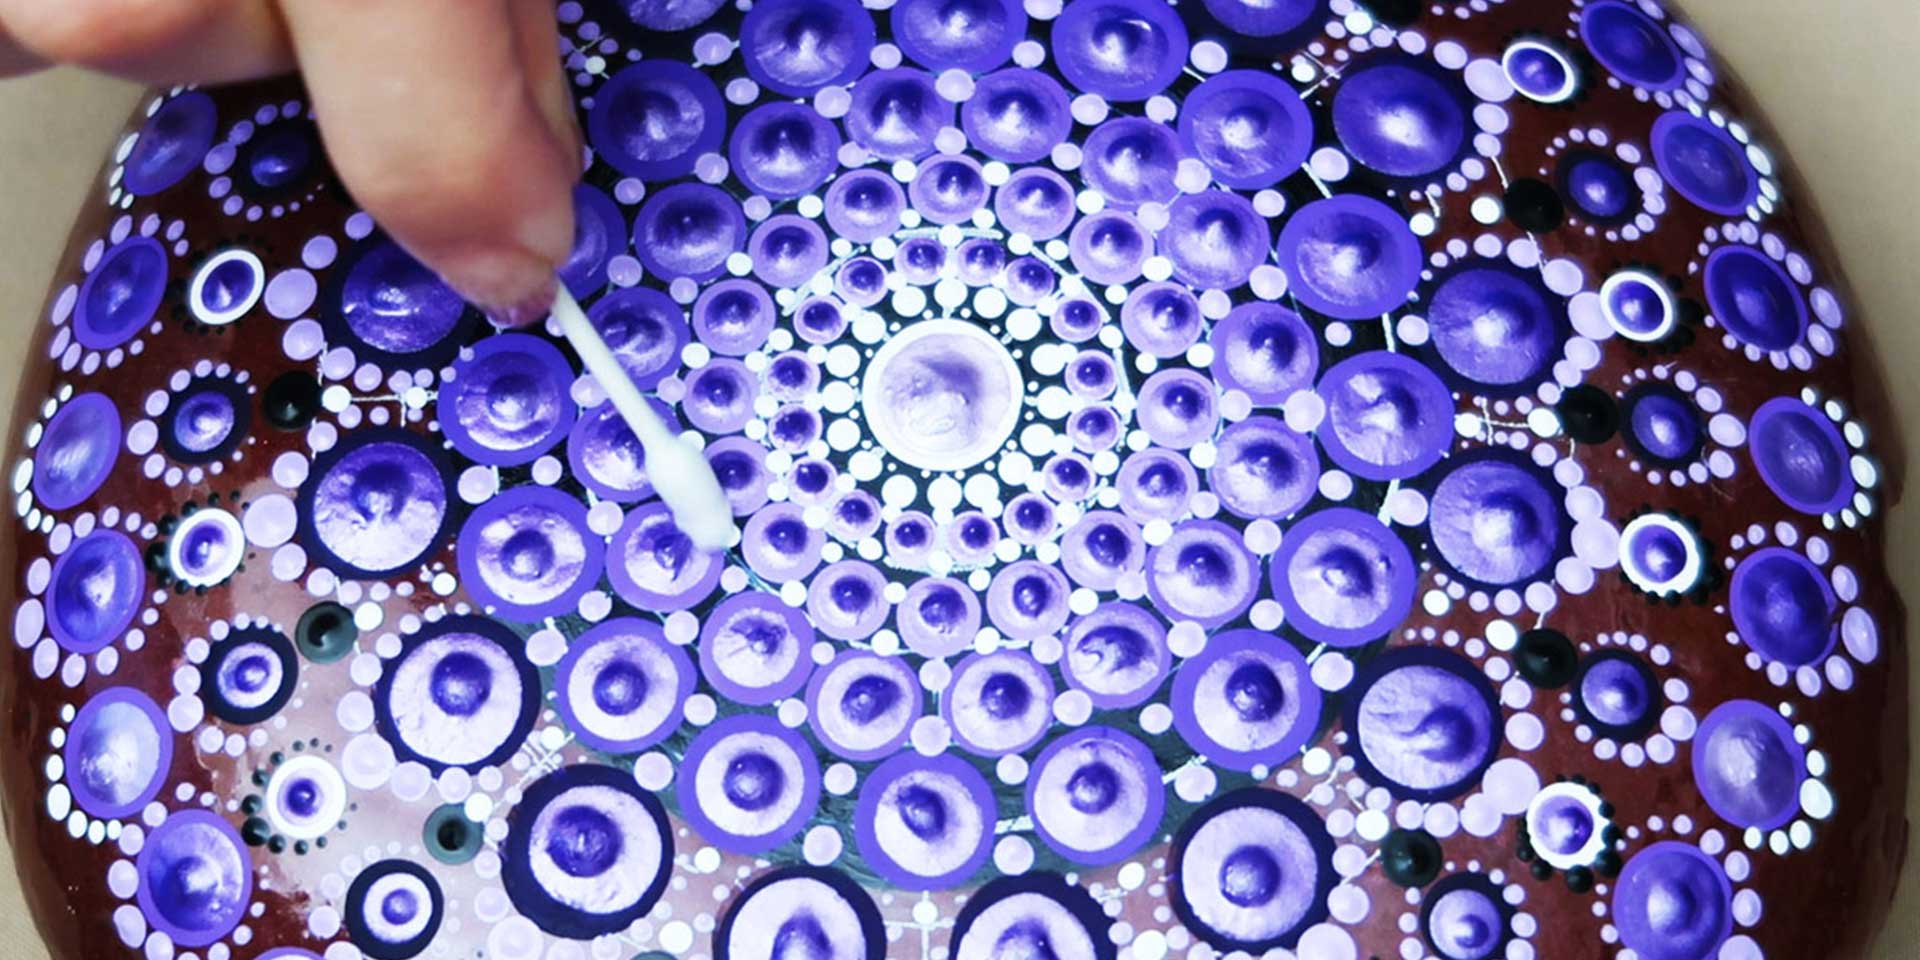 Dot Mandala Pattern Idea "Purple Haze" Time-Lapse Violet Shades Mandala Rock Painting with Music